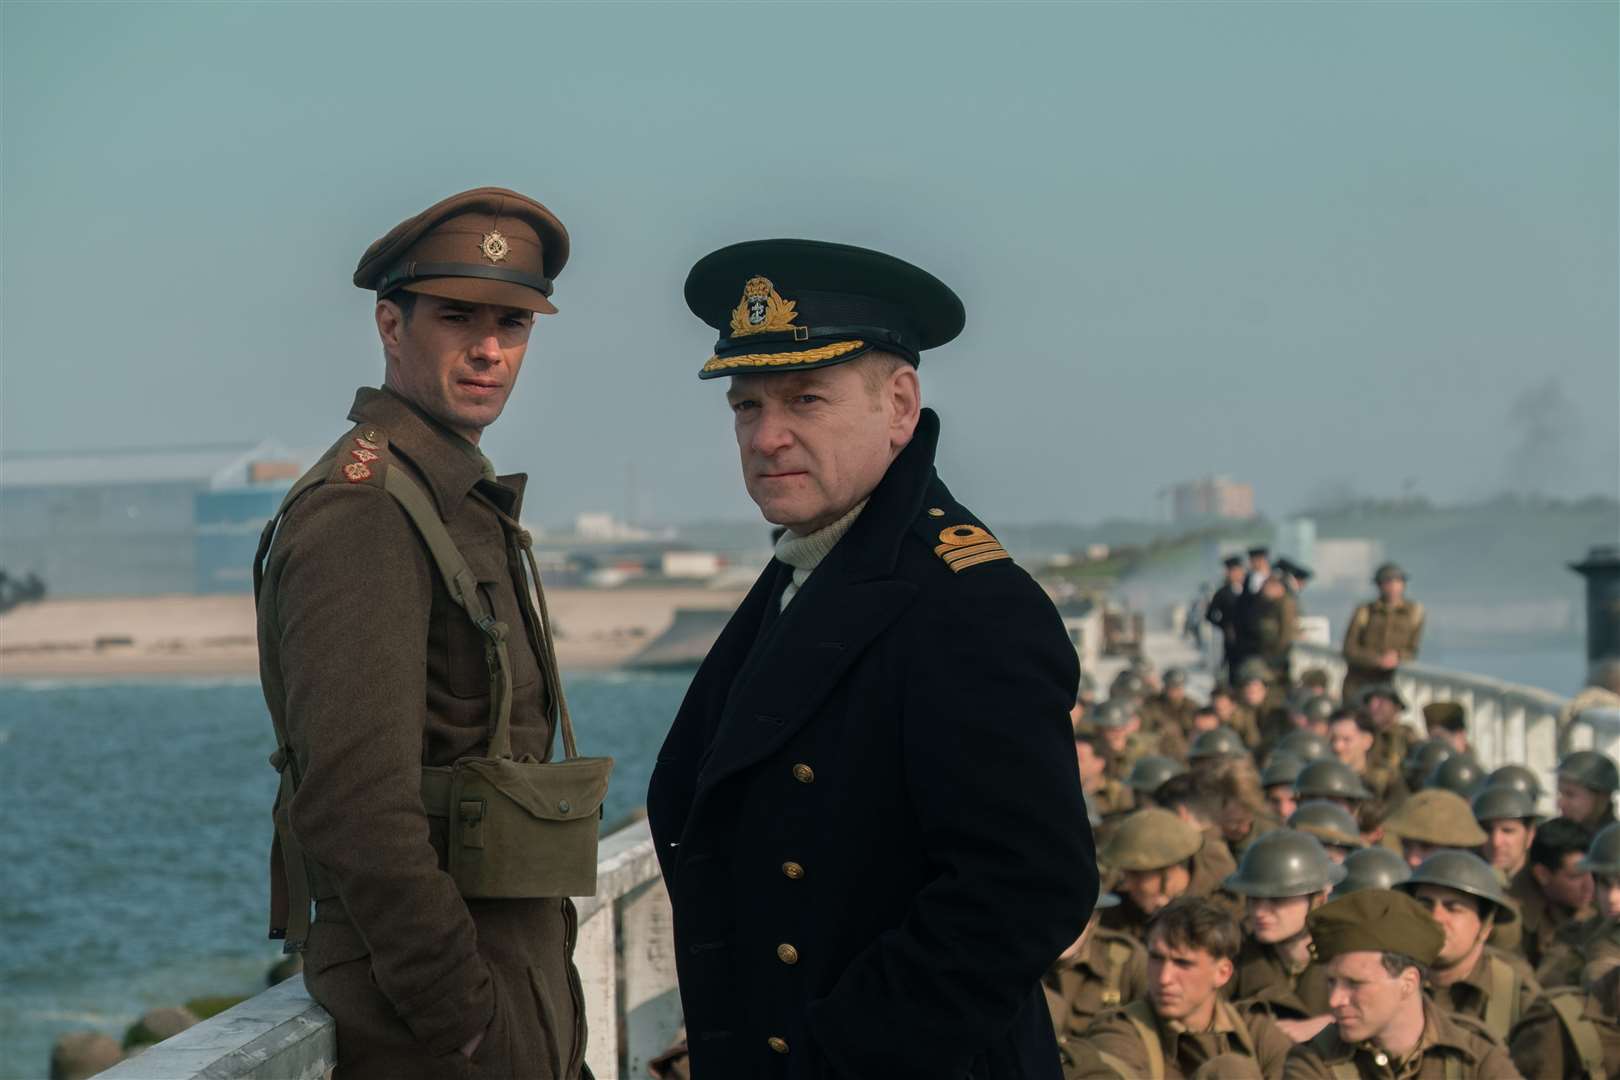 The daring mission was dramatised in Christopher Nolan's 2017 film Dunkirk. PA Photo/Warner Bros. Entertainment Inc./Melinda Sue Gordon.